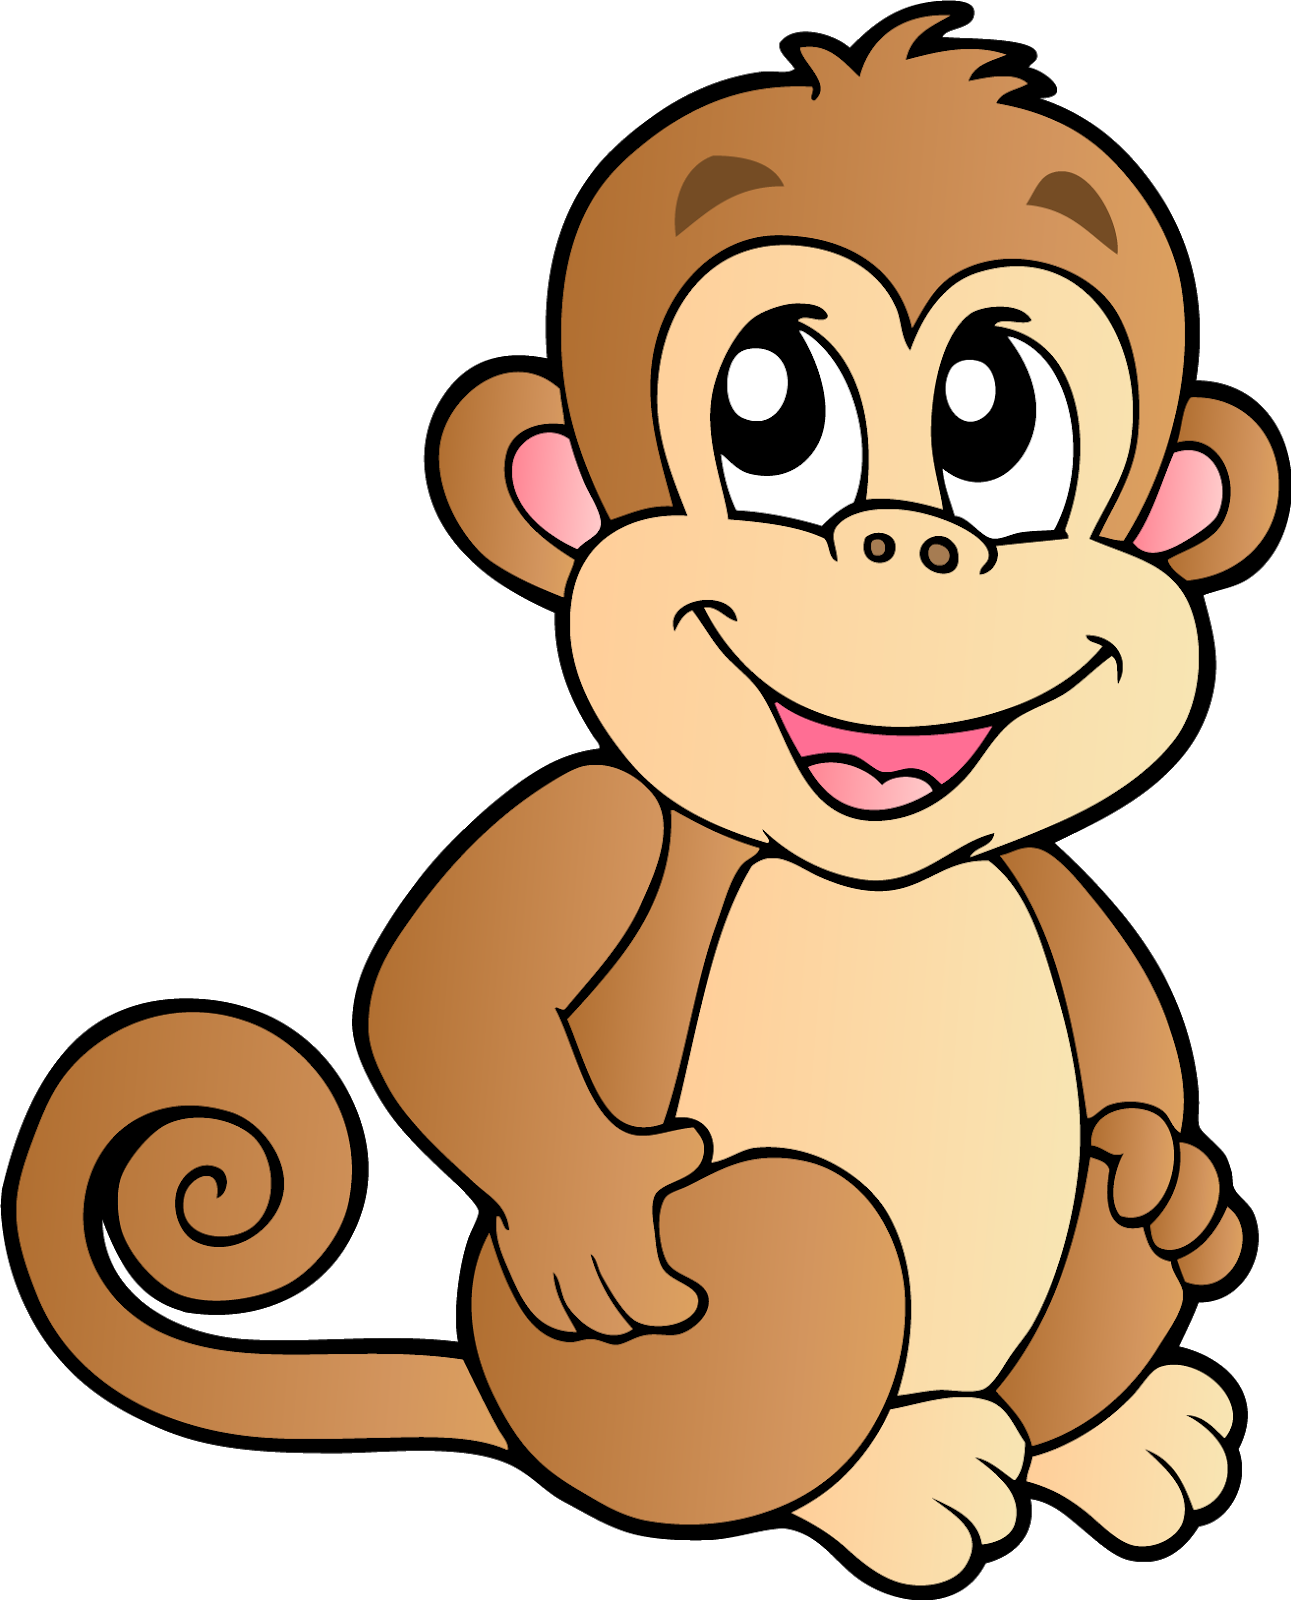 Free Printable Cartoon Monkey Pictures